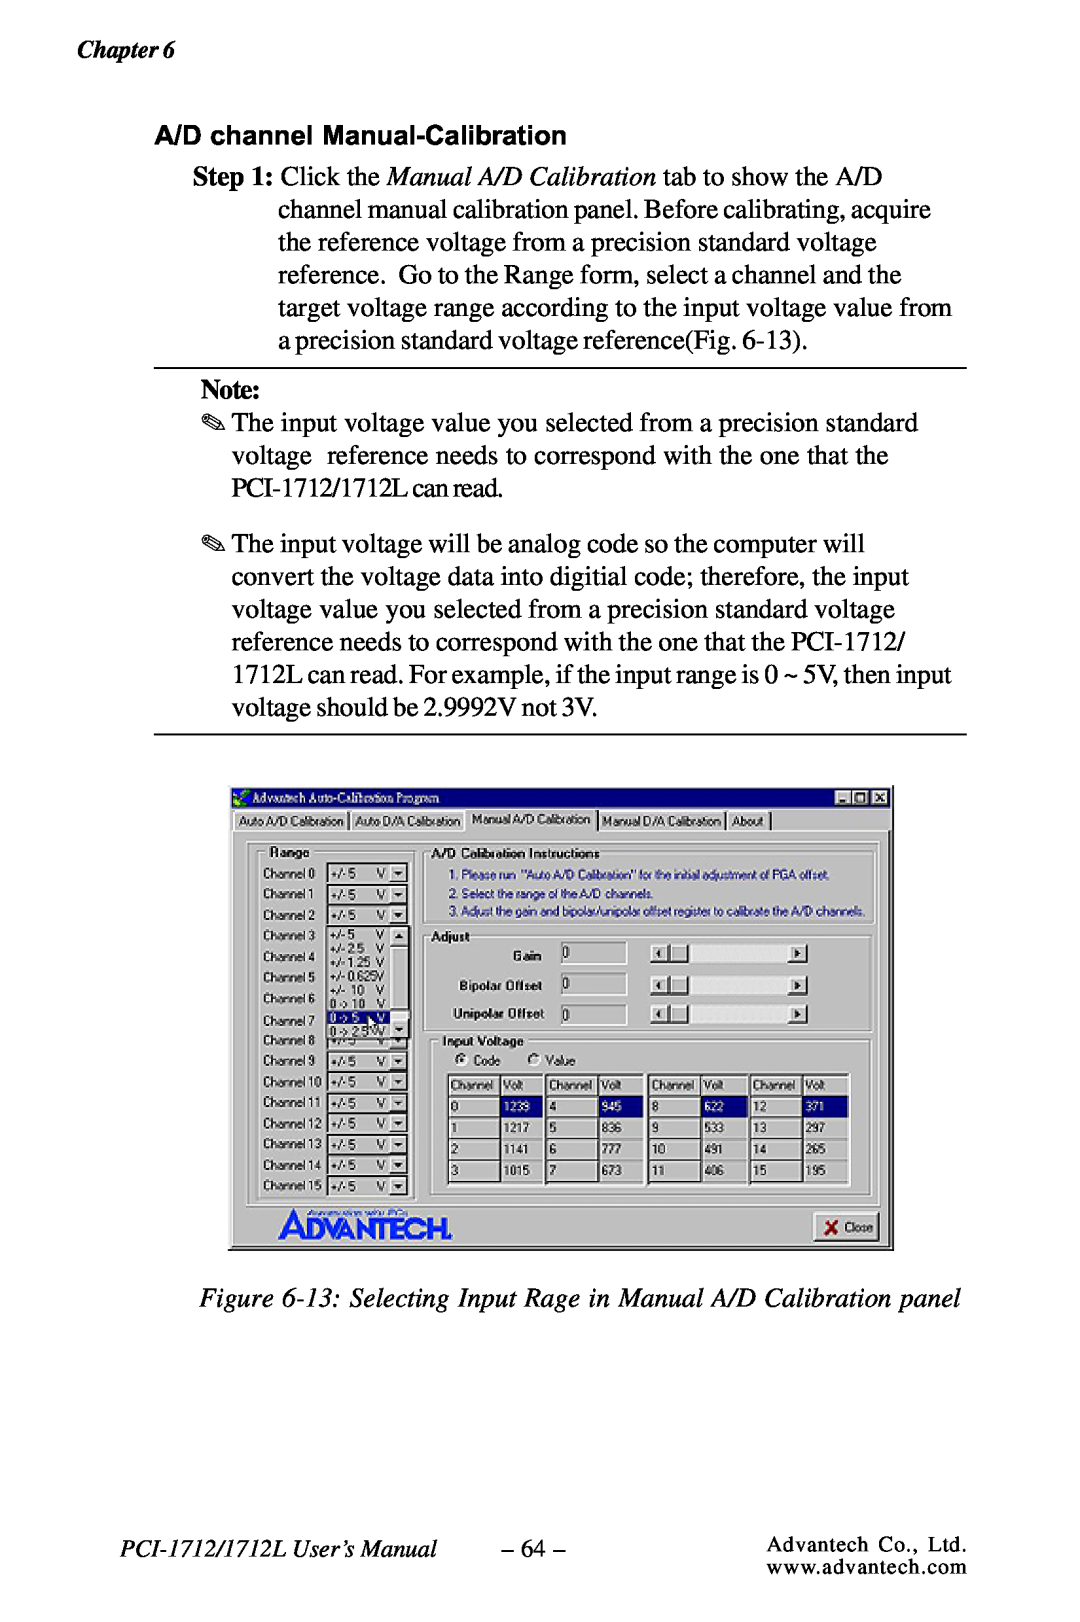 Konica Minolta PCI-1712L 13 Selecting Input Rage in Manual A/D Calibration panel, A/D channel Manual-Calibration 